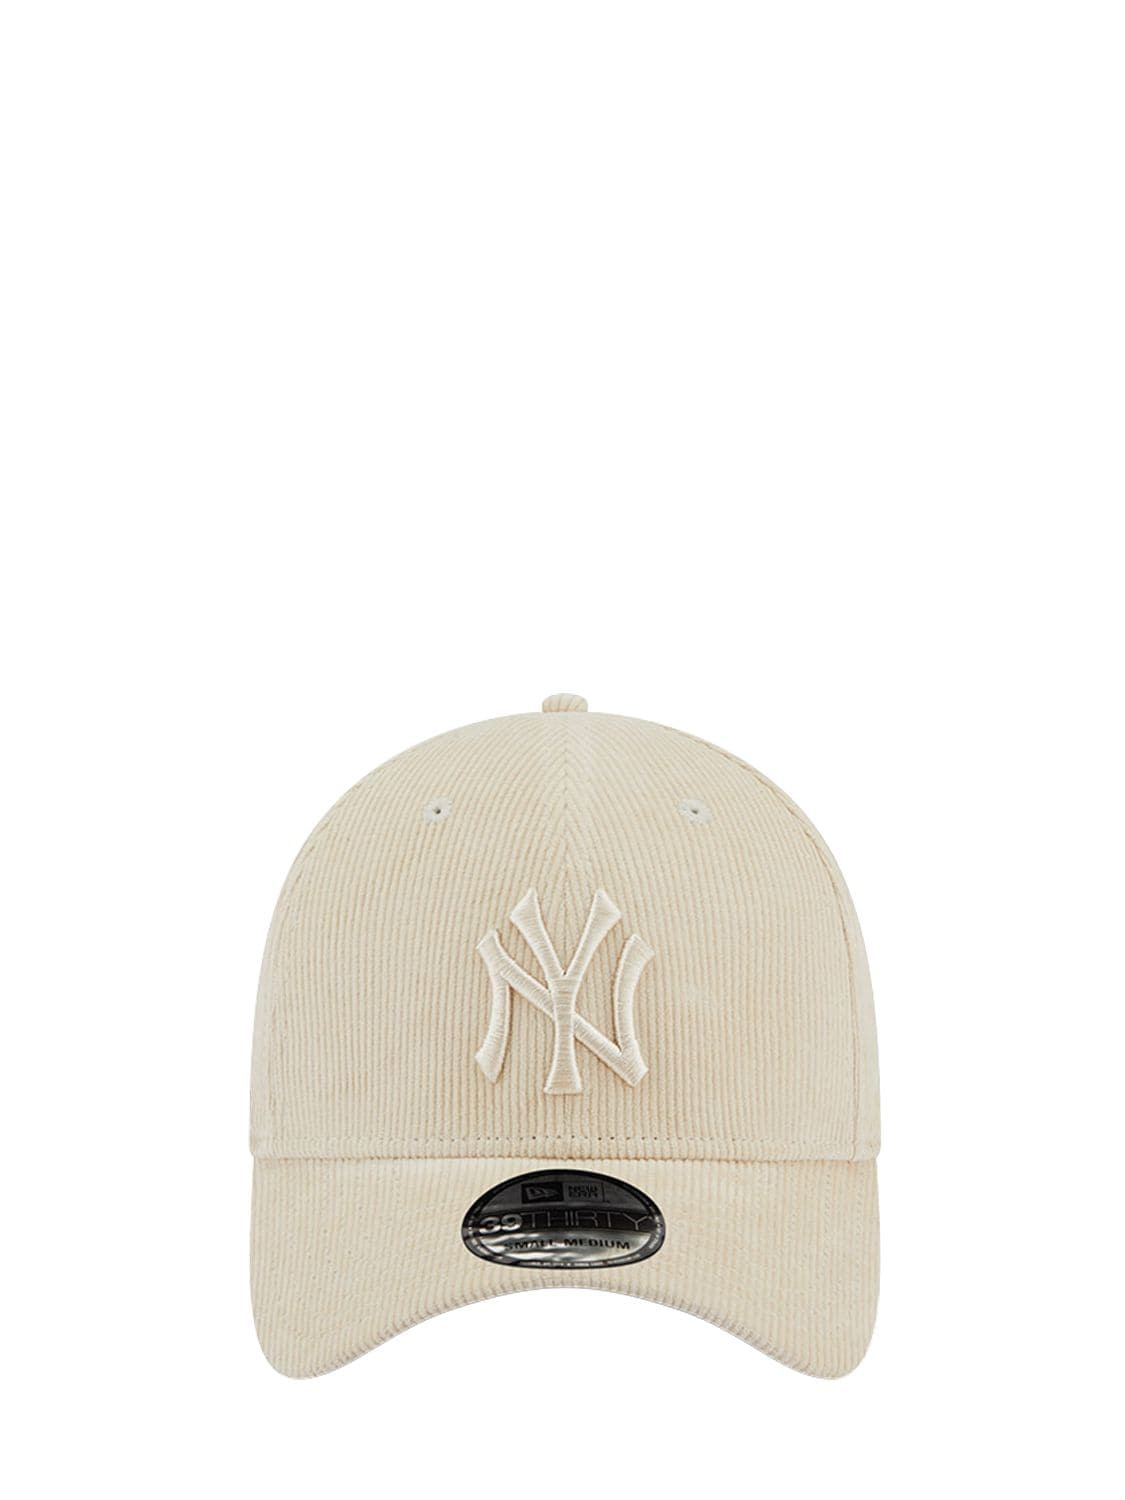 Image of Cord 39thirty New York Yankees Cap